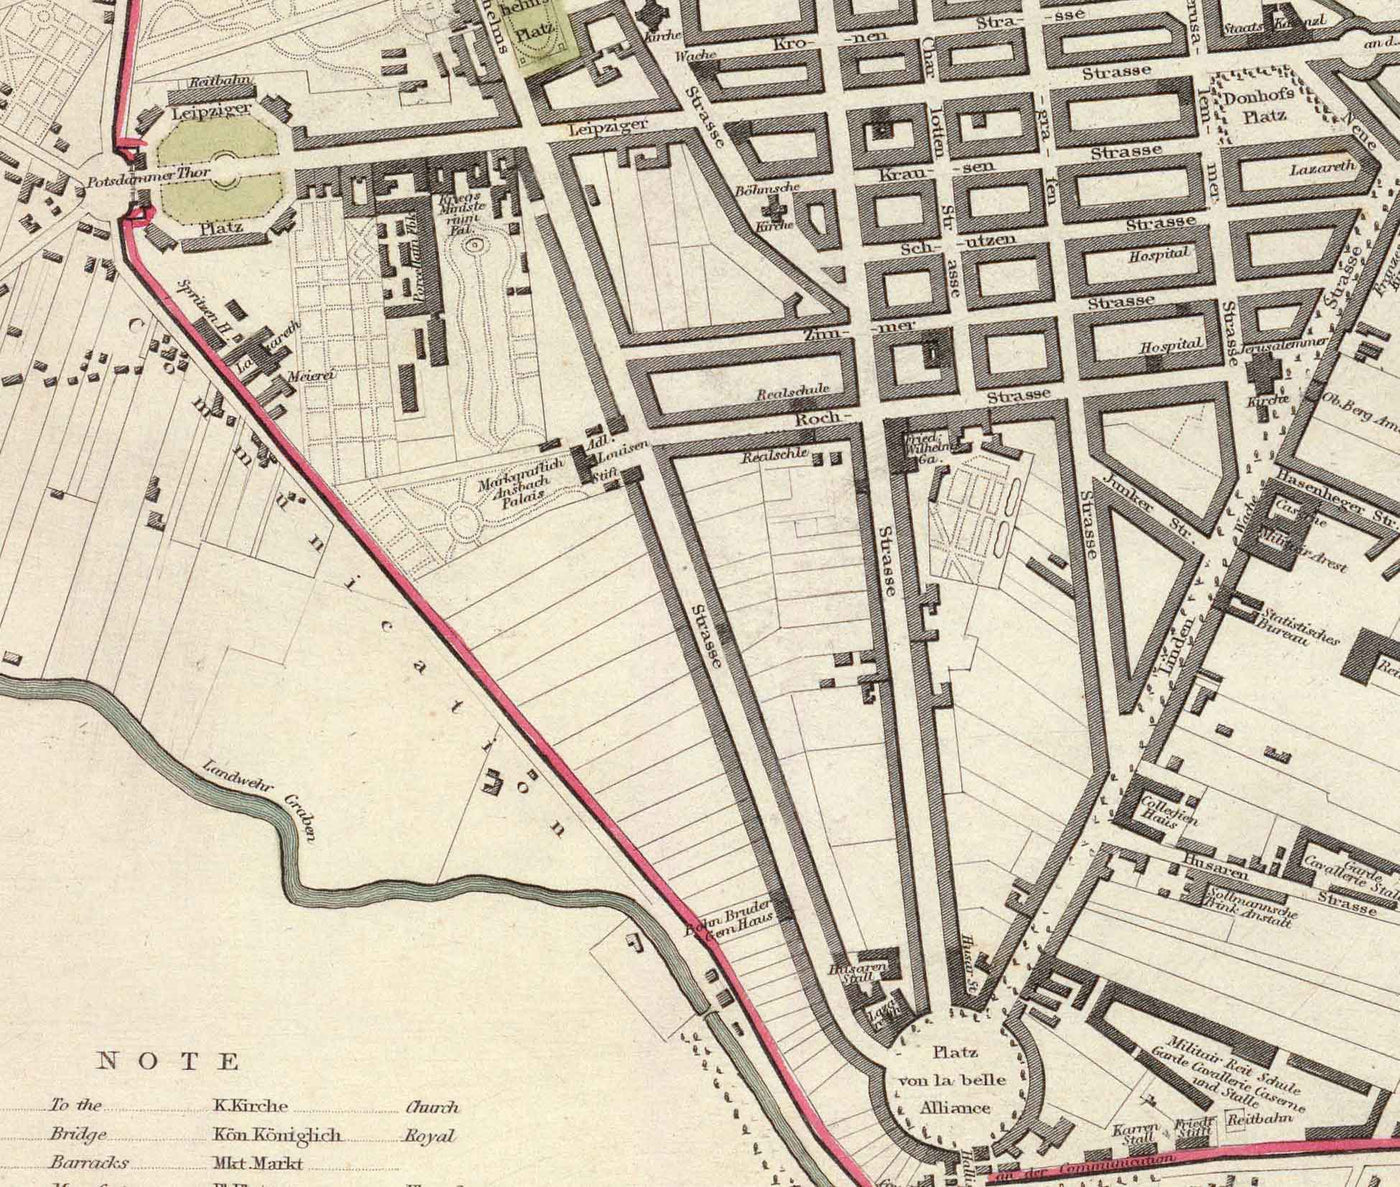 Old Map of Berlin in 1833 by SDUK - Germany, Tiergarten, Alexanderplatz, Berlin Wall, Brandenburg Gate